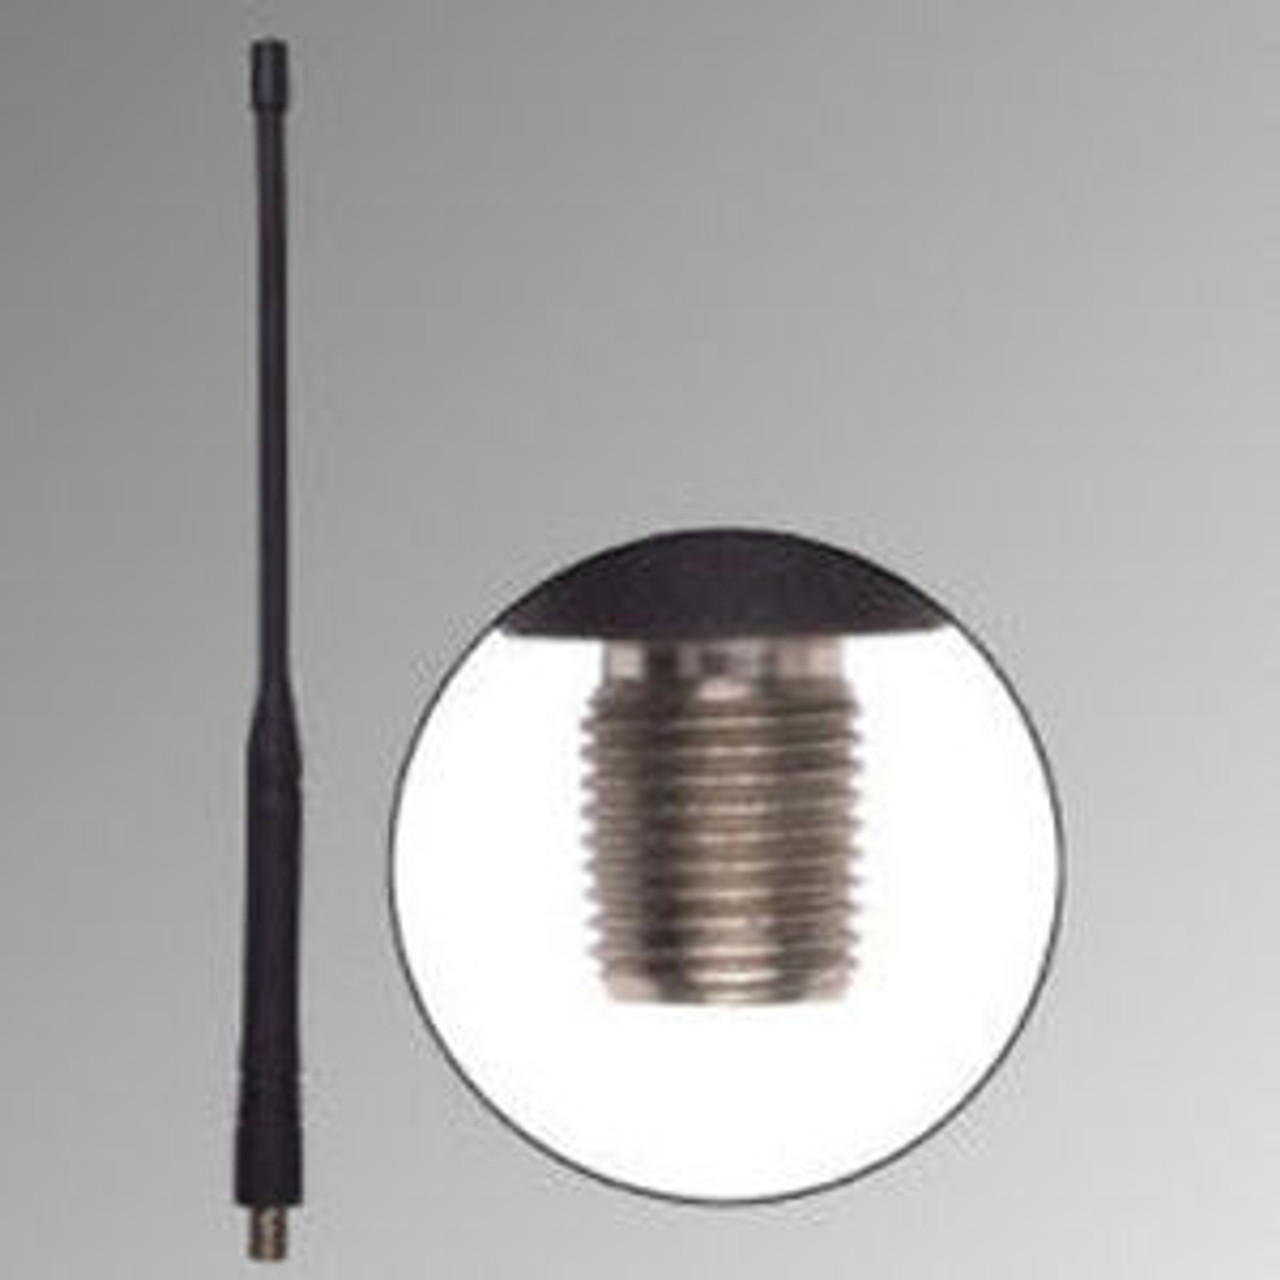 Bendix King GPHX Long Range Antenna - 10.5", VHF, 155-165 MHz